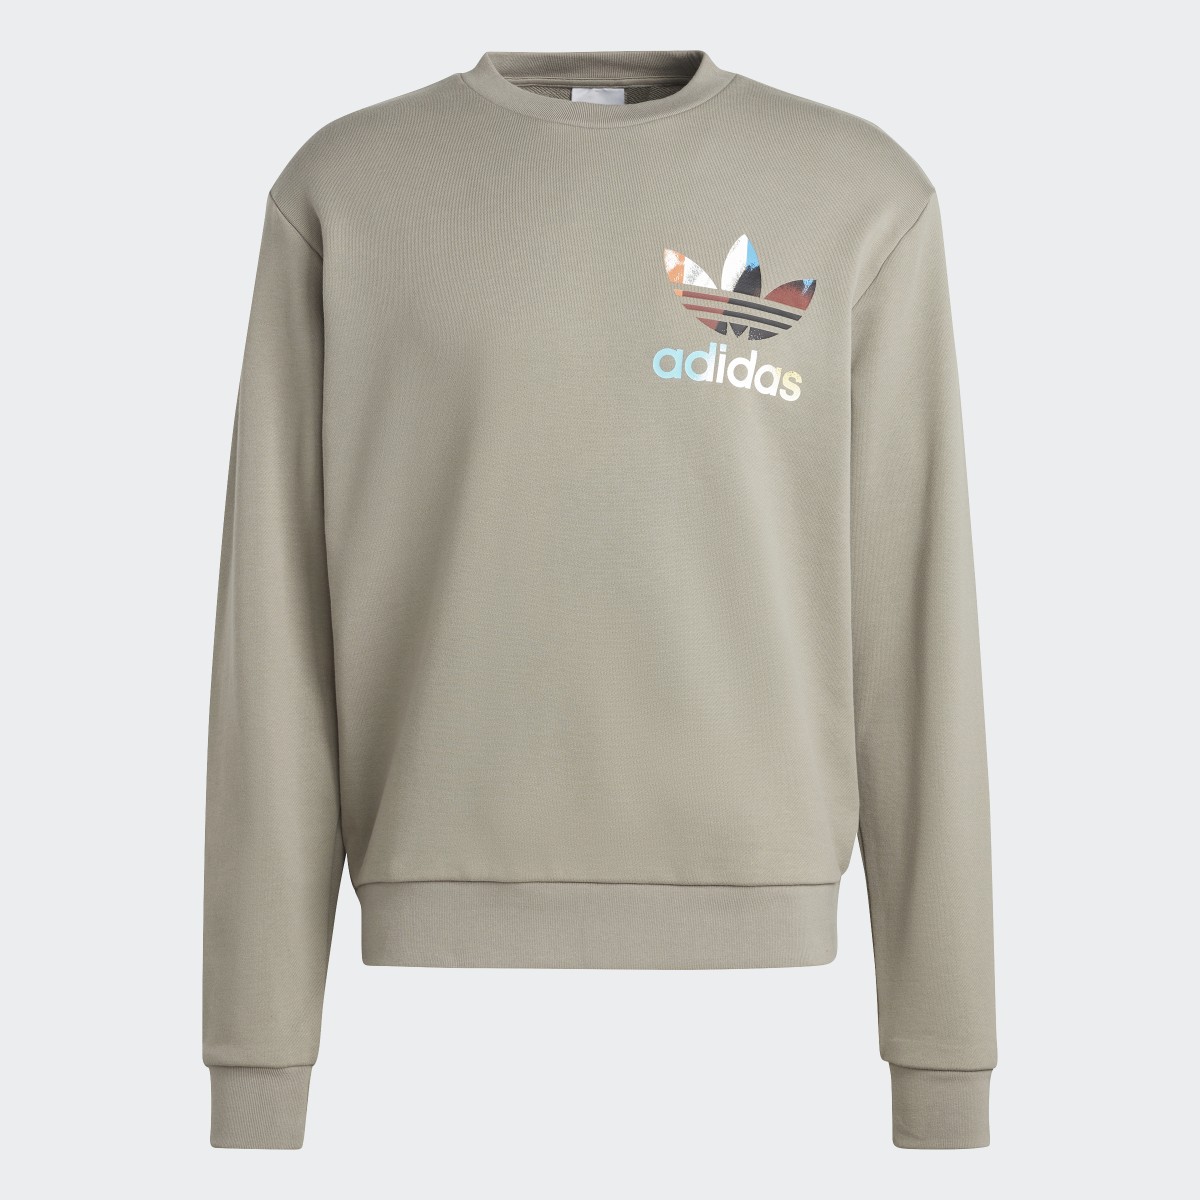 Adidas Graphics Off the Grid Crew Sweatshirt. 5